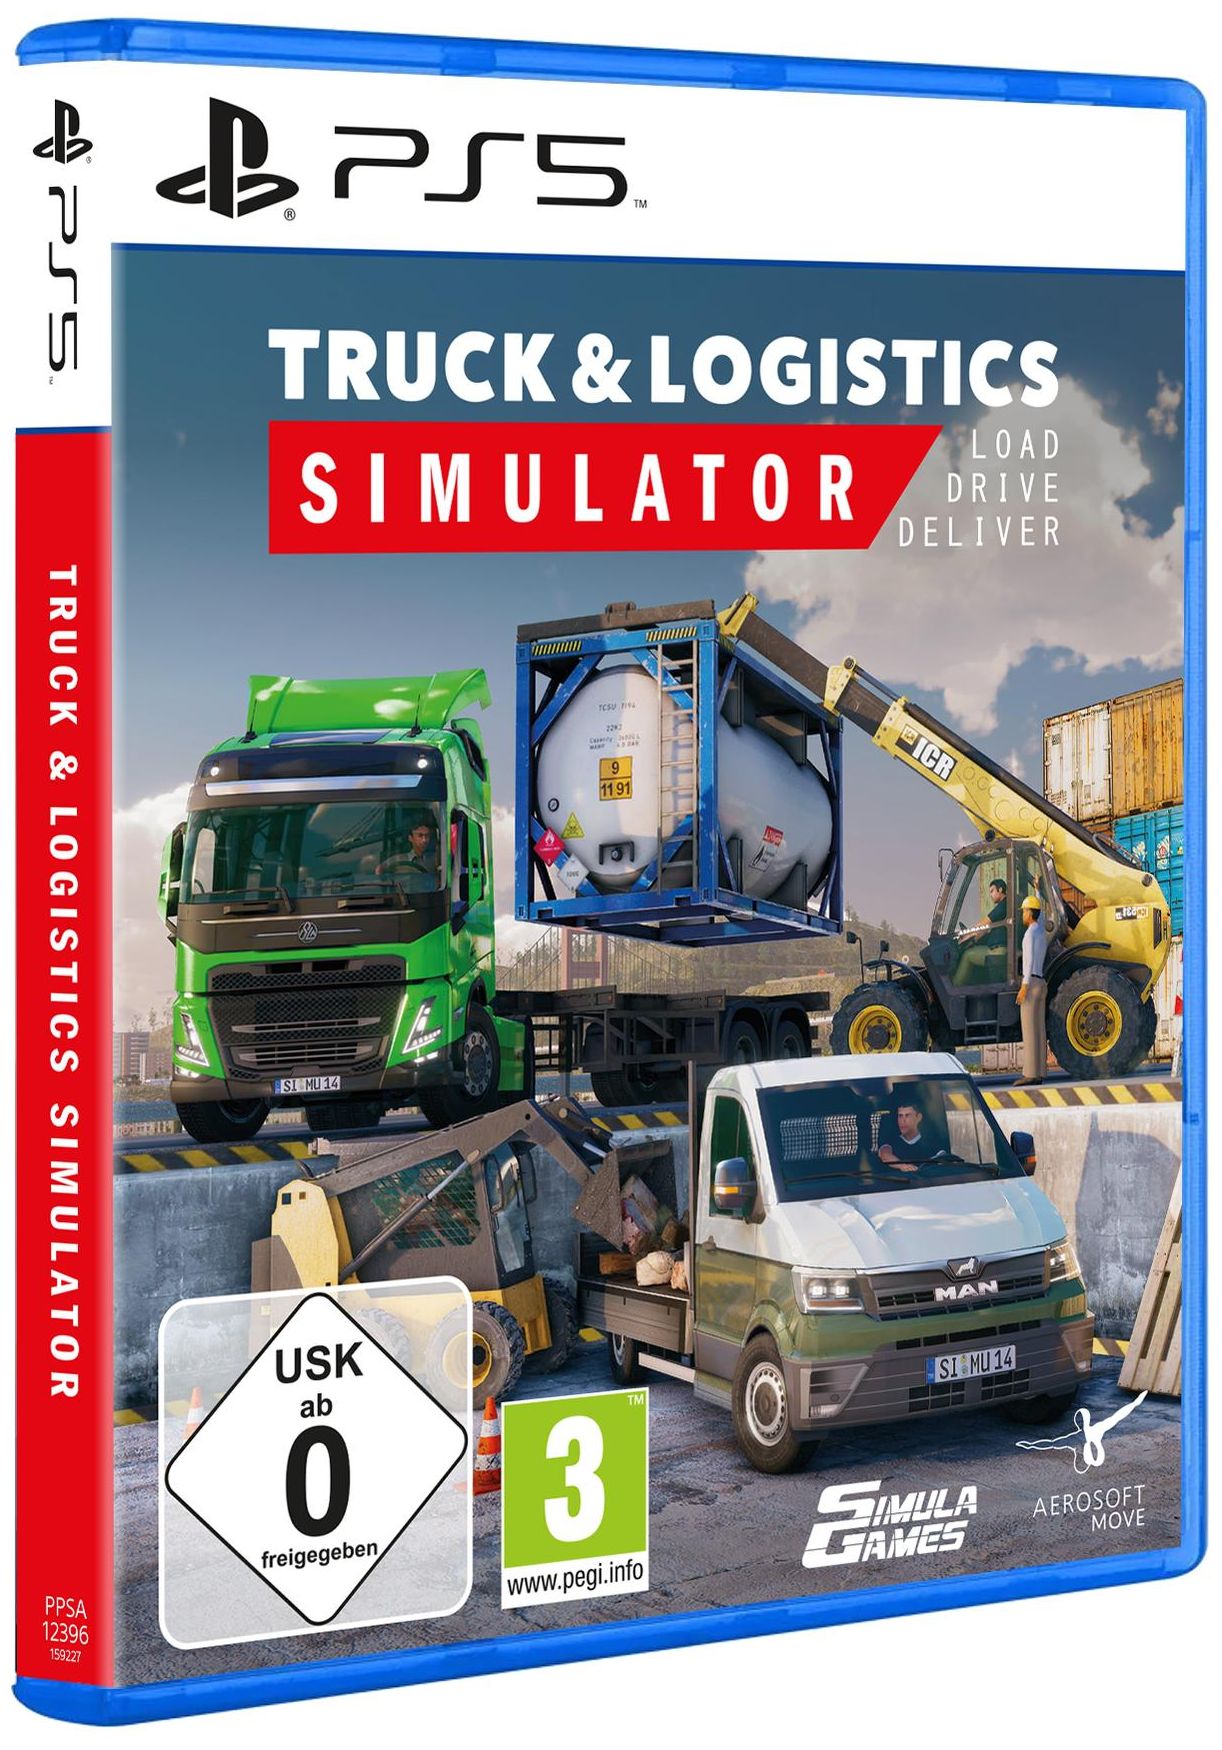 https://image.boomstore.de/5000x5000x80/z1/truck-und-logistics-simula-4015918159227-1.jpeg